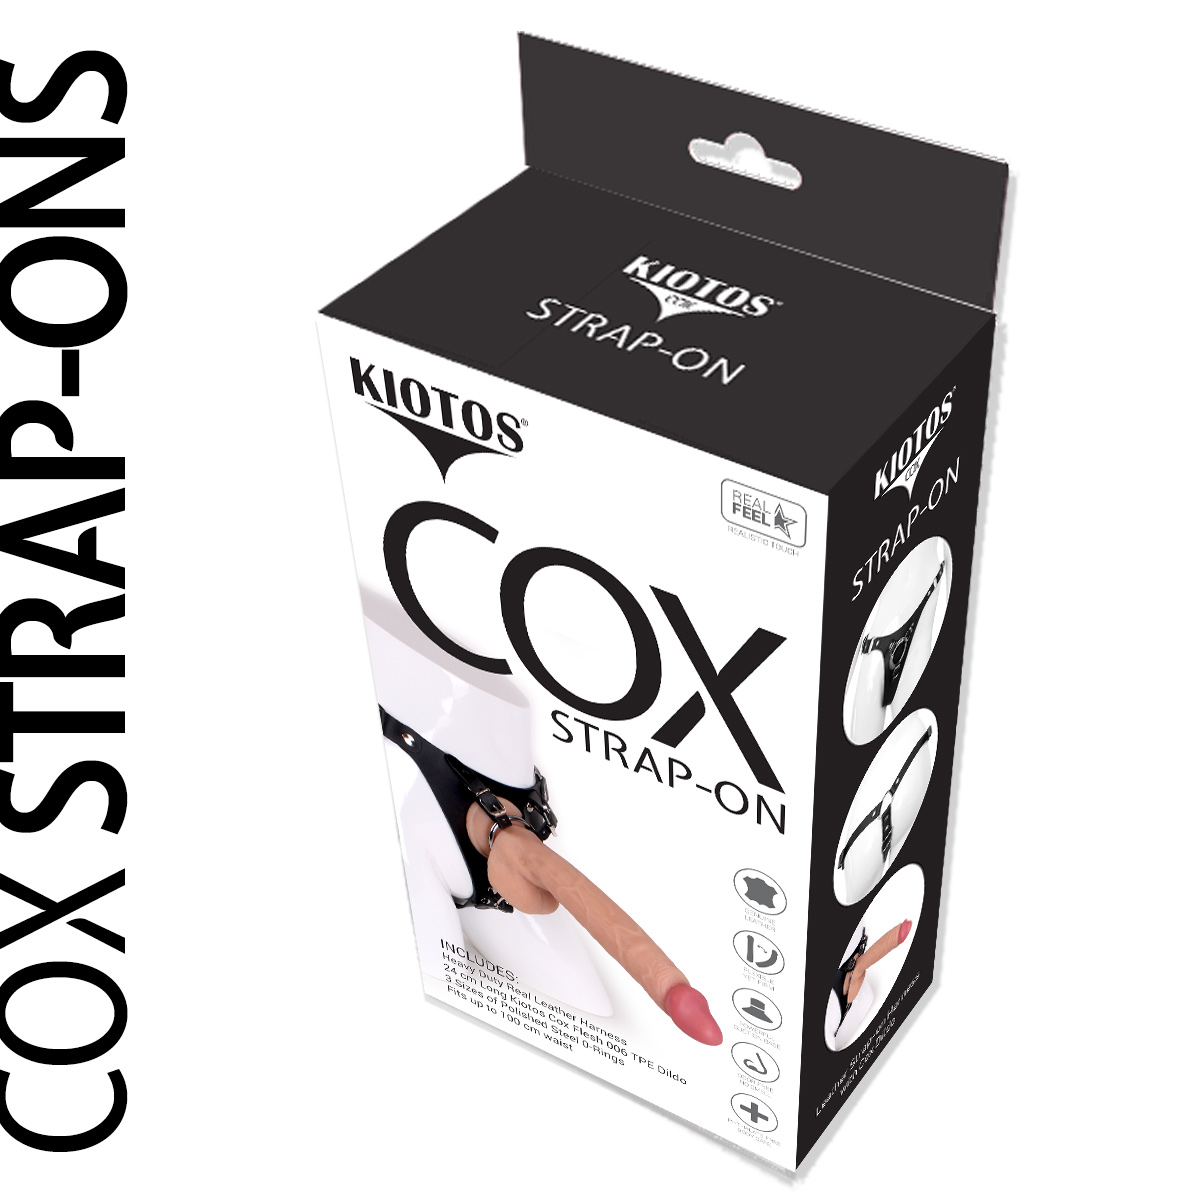 Kiotos-COX-Strap-On-Dildo-Flesh-006-OPR-307902-4